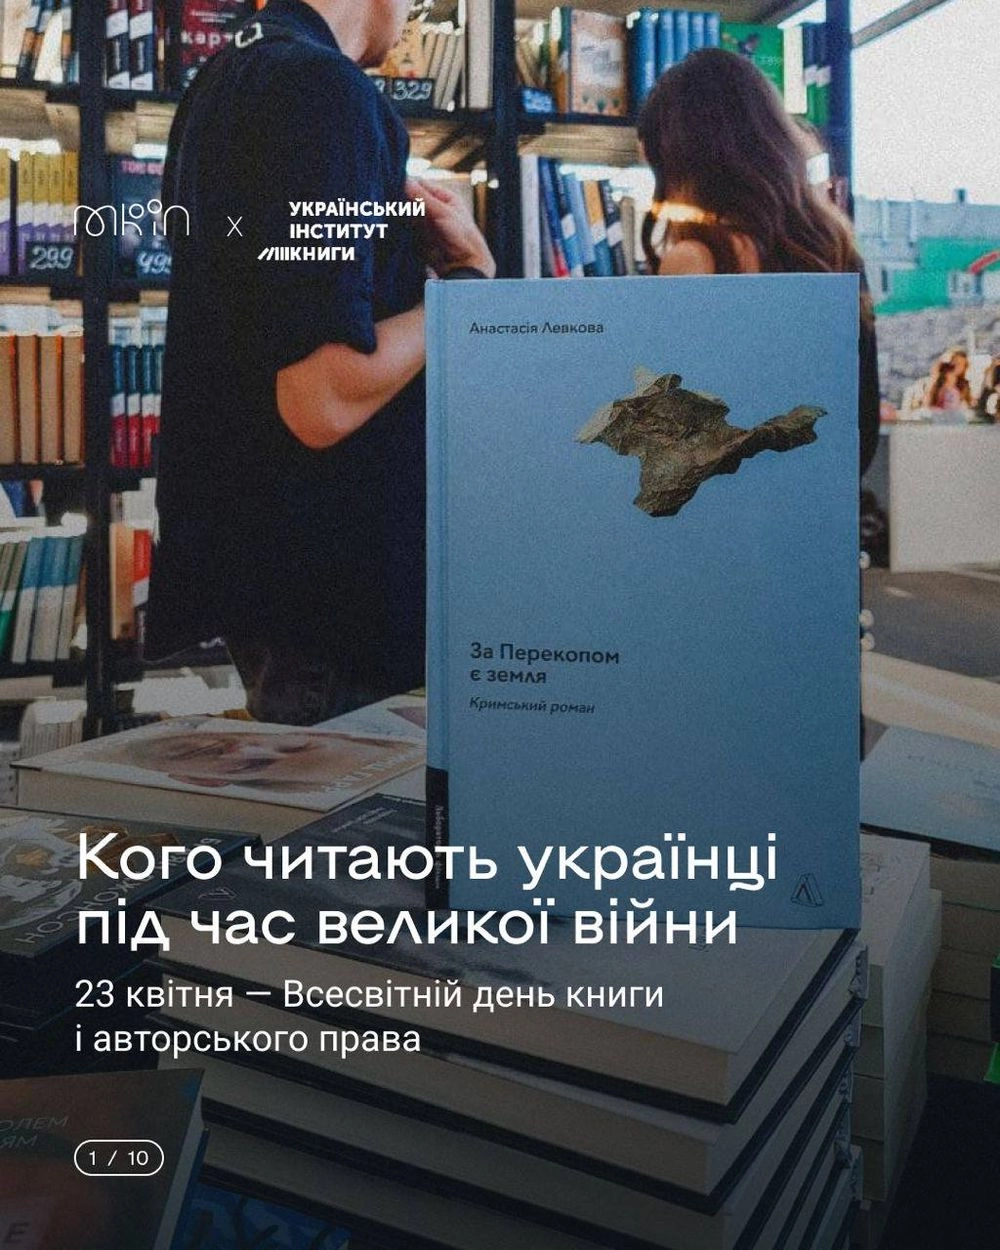 Ukrainian literature is thriving despite the war: 54% of readers choose Ukrainian books